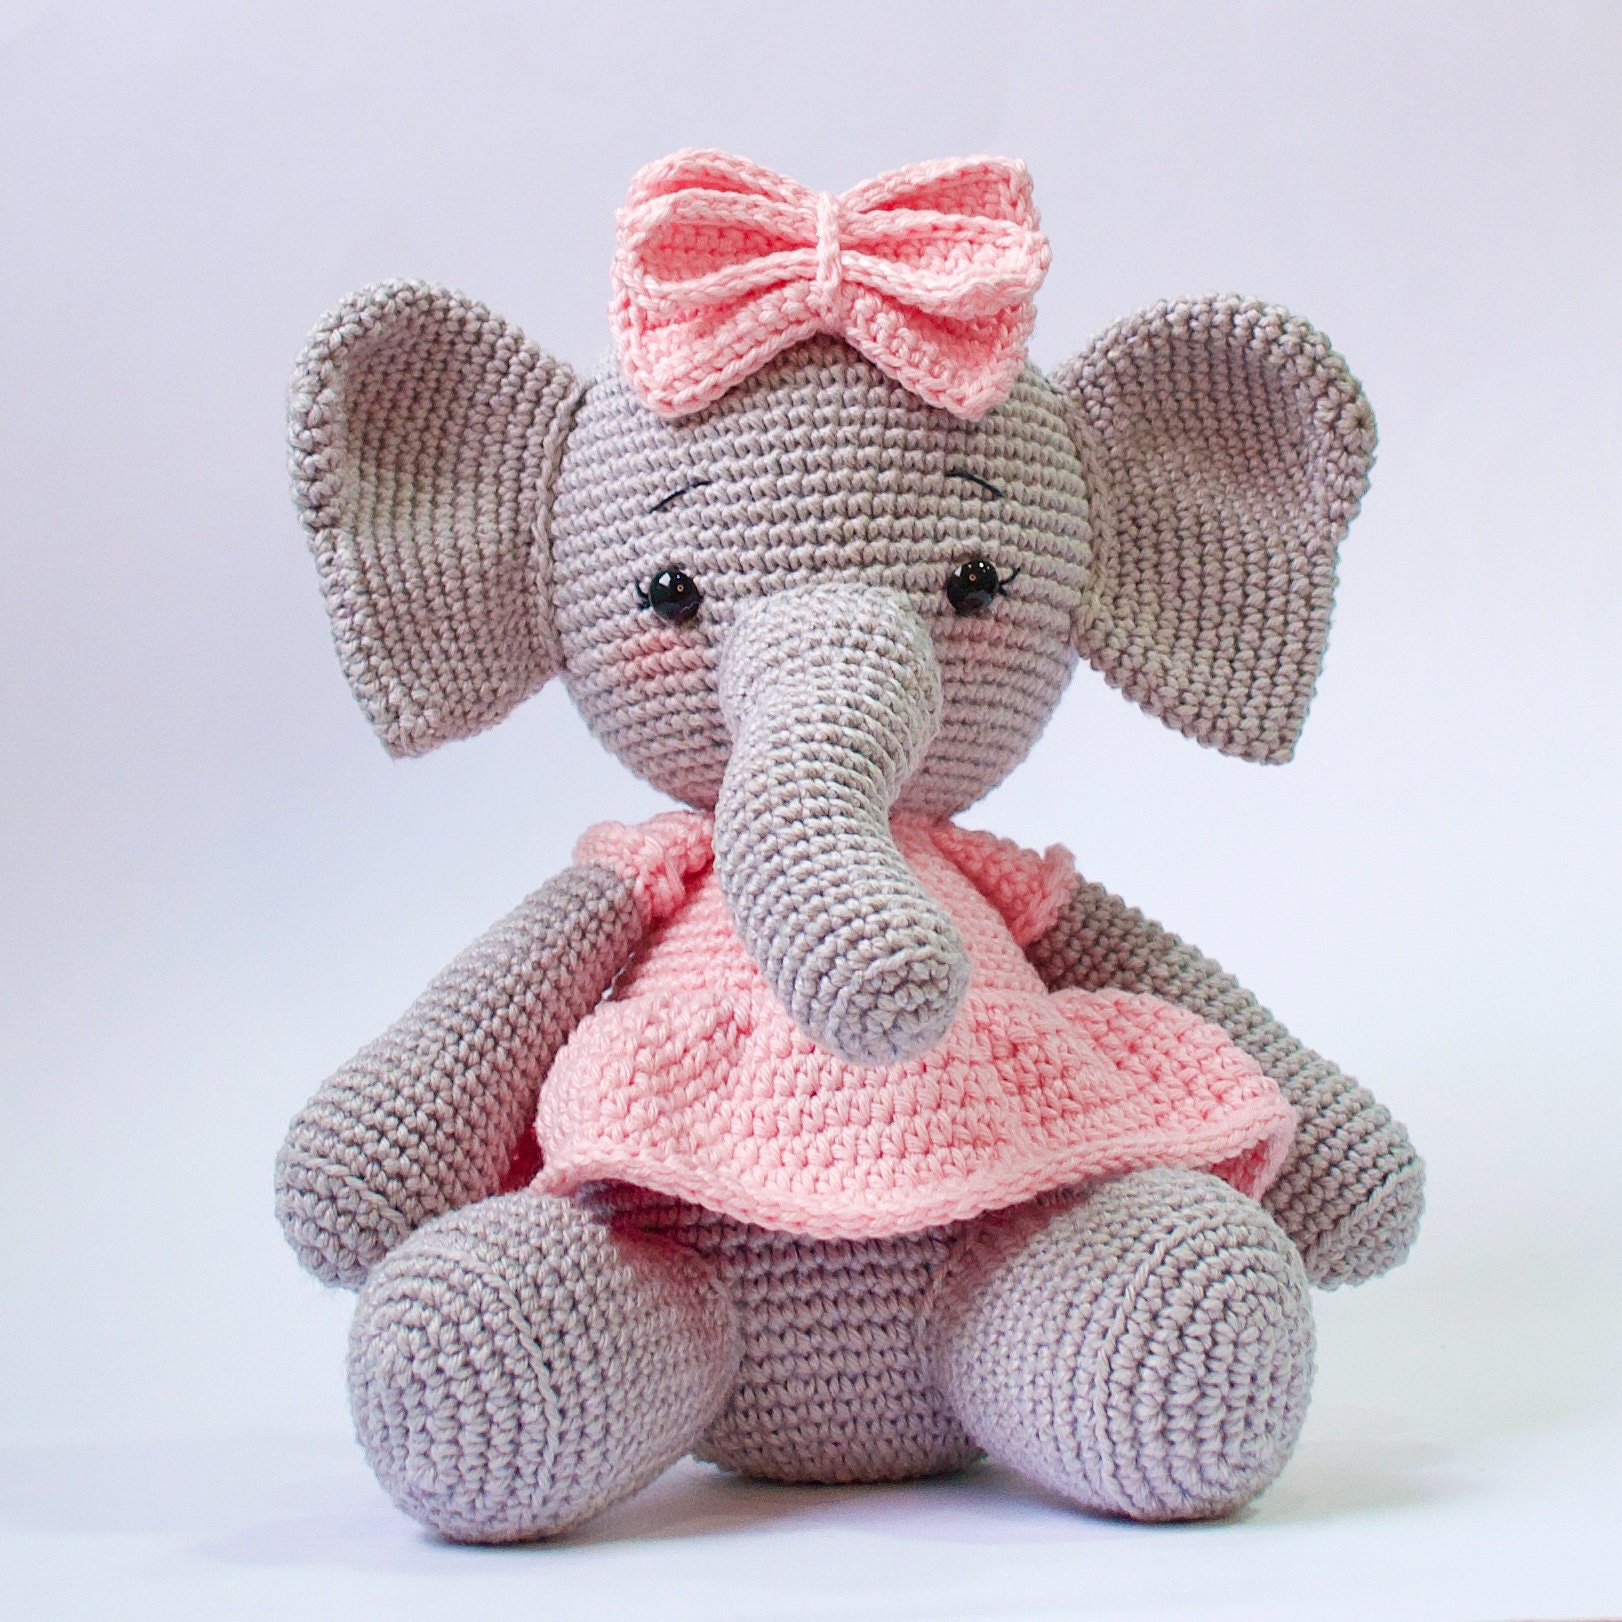 crochet-pattern-elephant-english-crochet-elephant-pattern-etsy